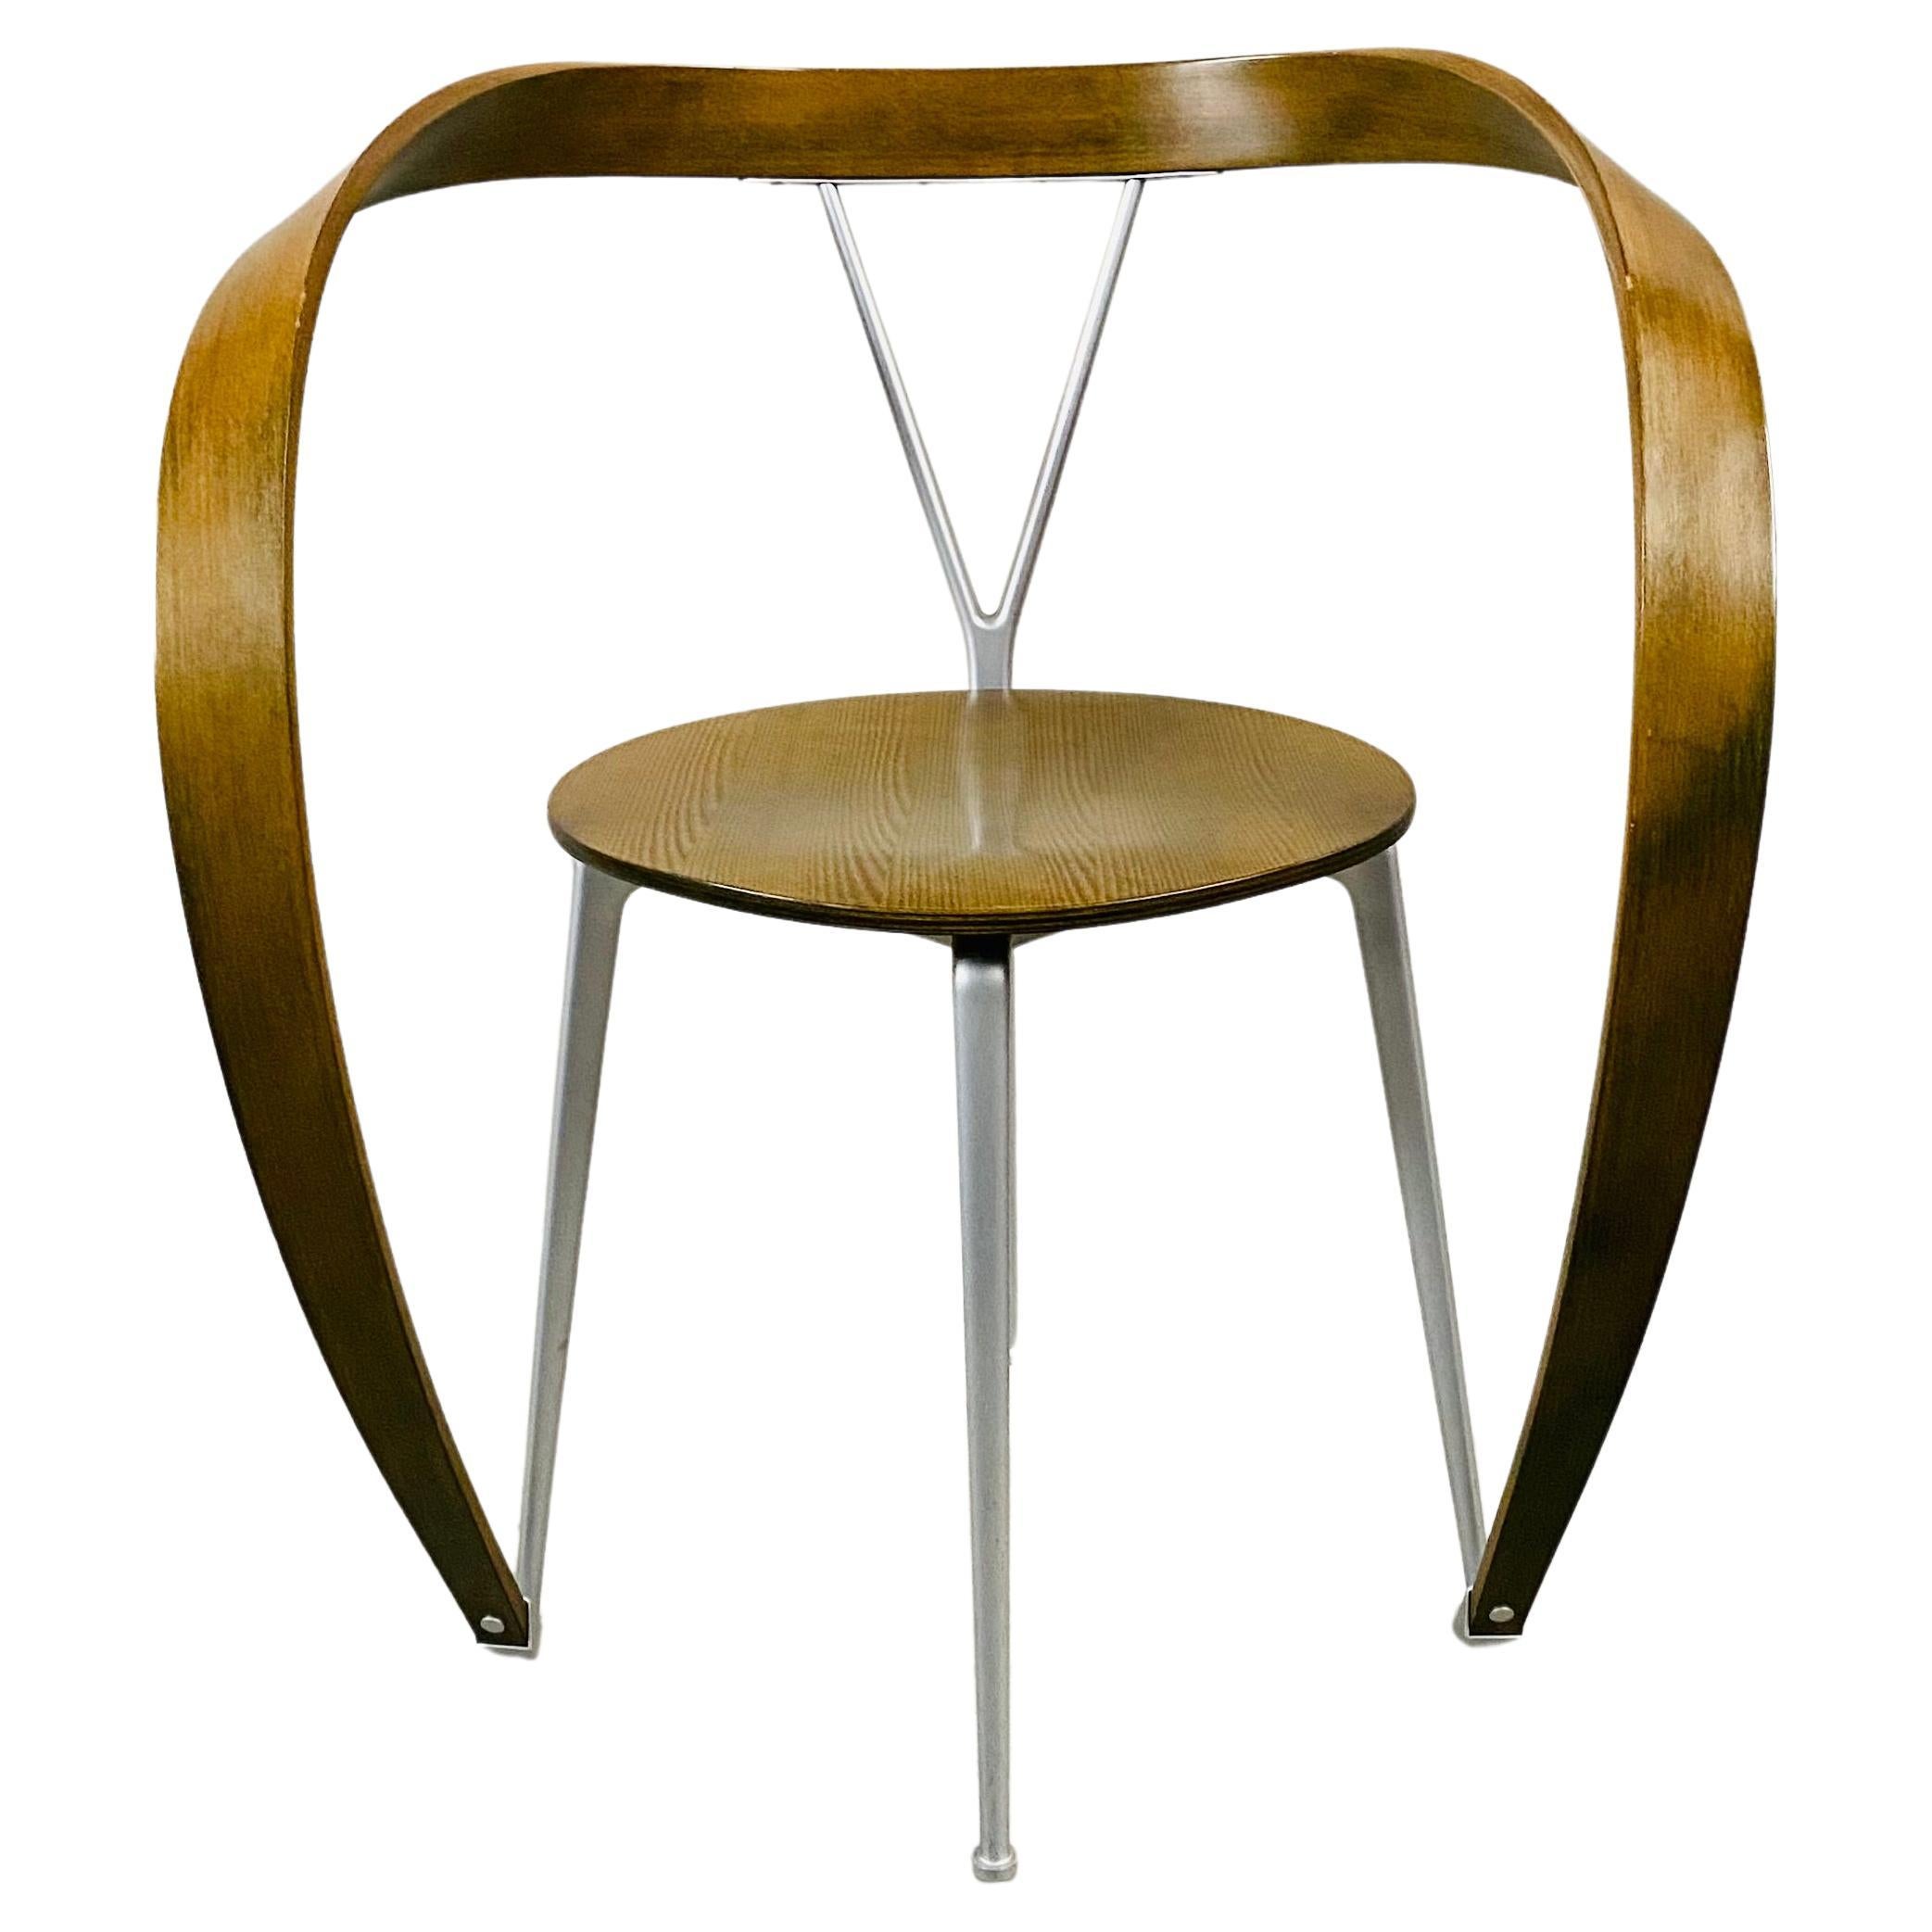 Revers Chair by Andrea Branzi for Cassina Italian Design 1993